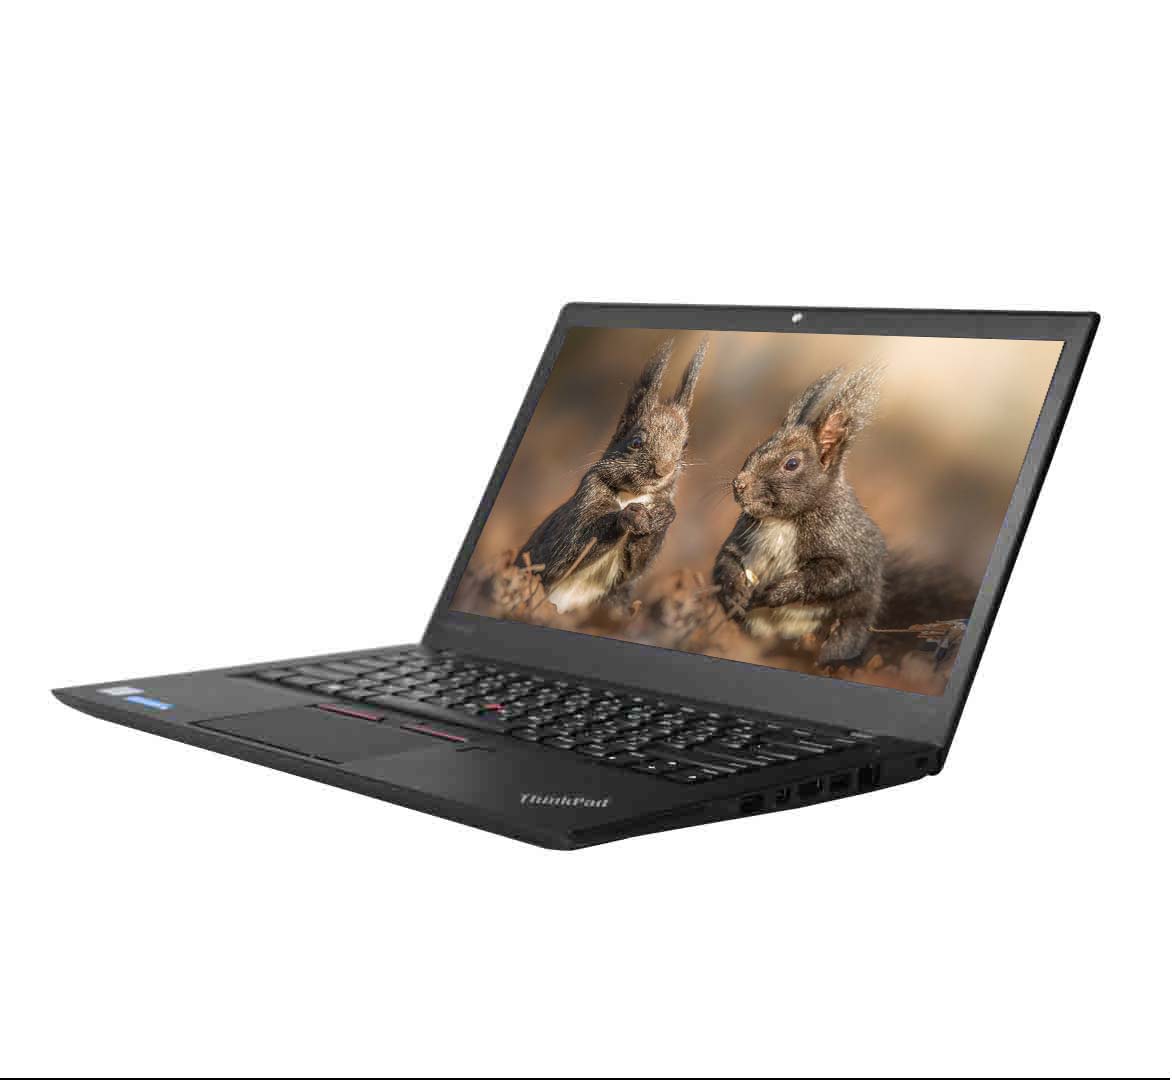 Lenovo ThinkPad T460s Ultrabook Laptop, Intel Core i5-6th Gen CPU, 8GB RAM, 256GB SSD, 14.1 inch Touchscreen, Win 10 Pro